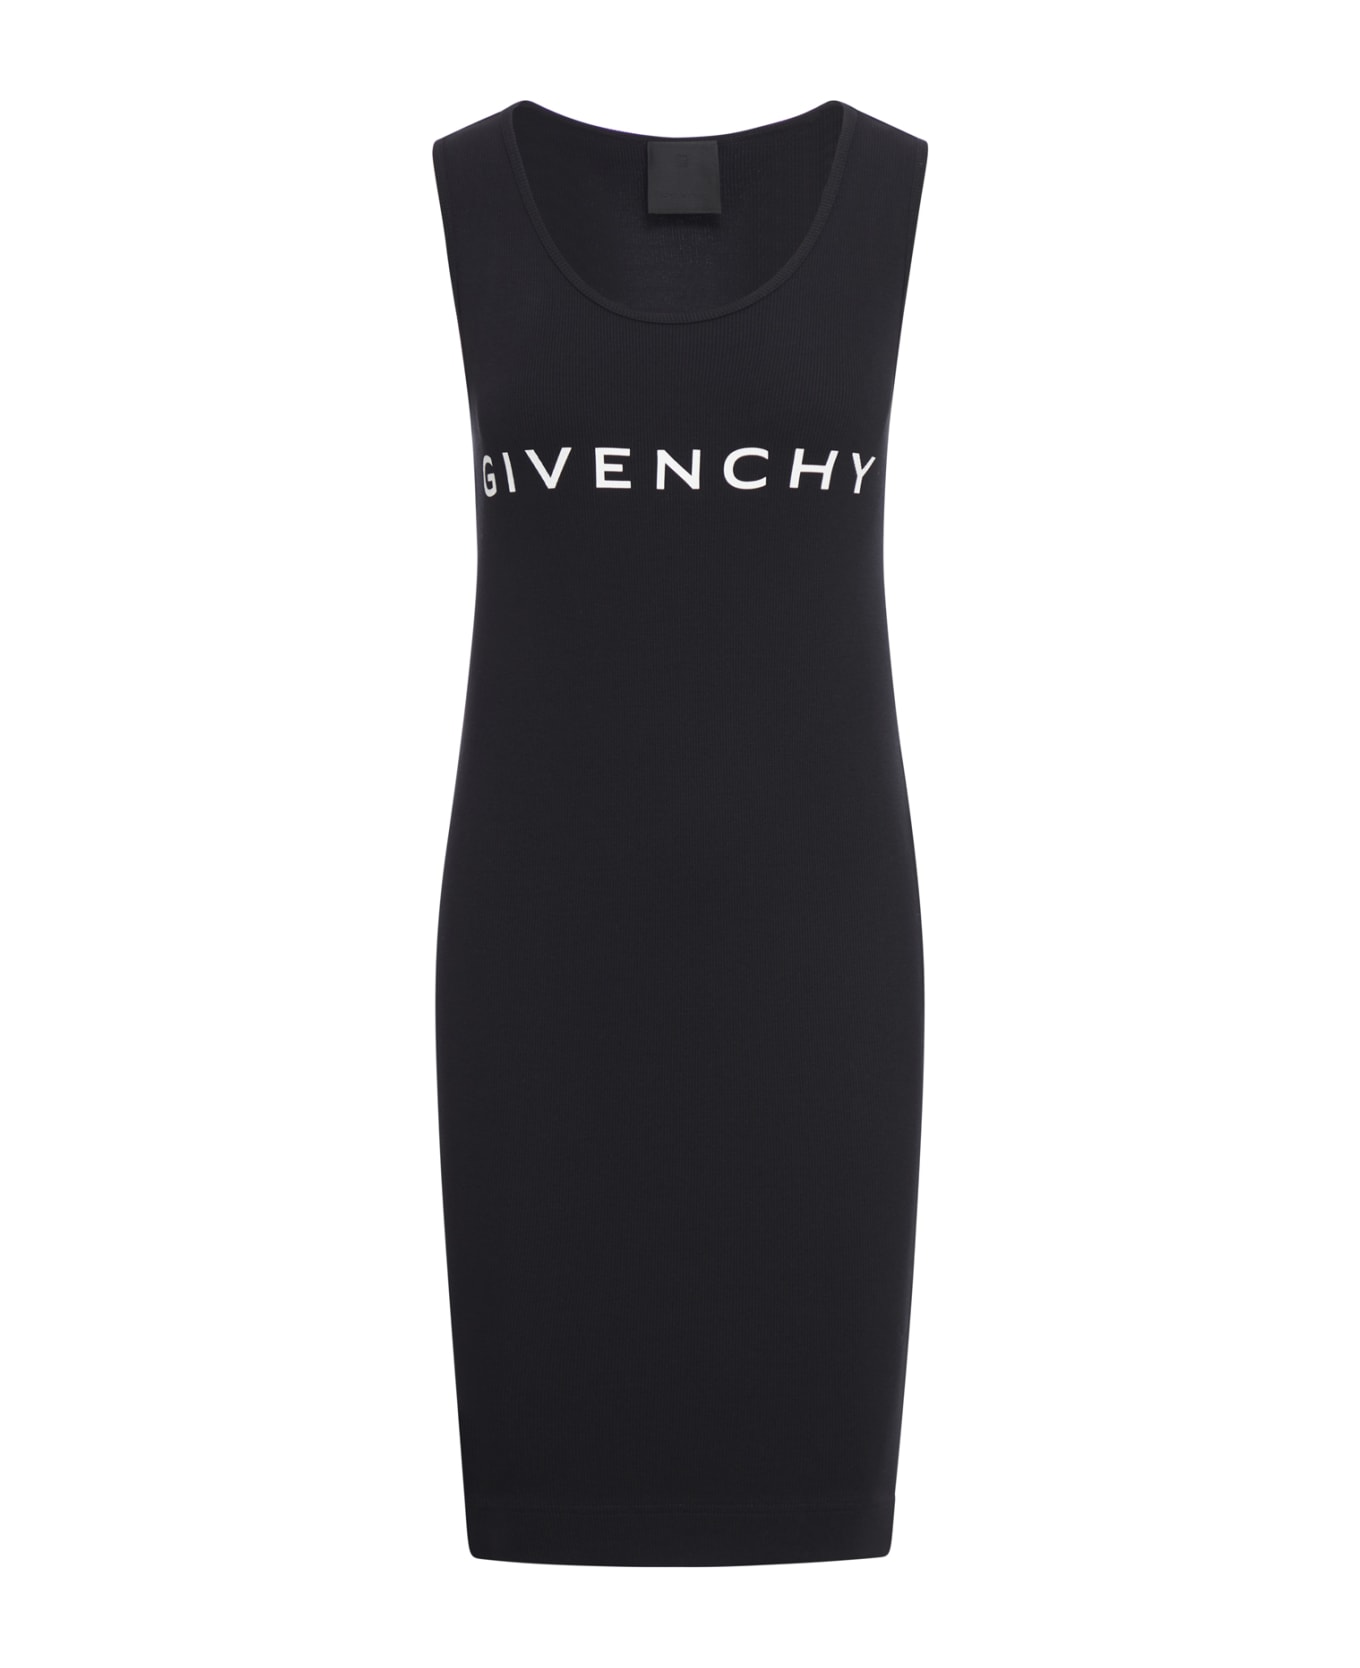 Givenchy Tank Top Mini Dress - Black